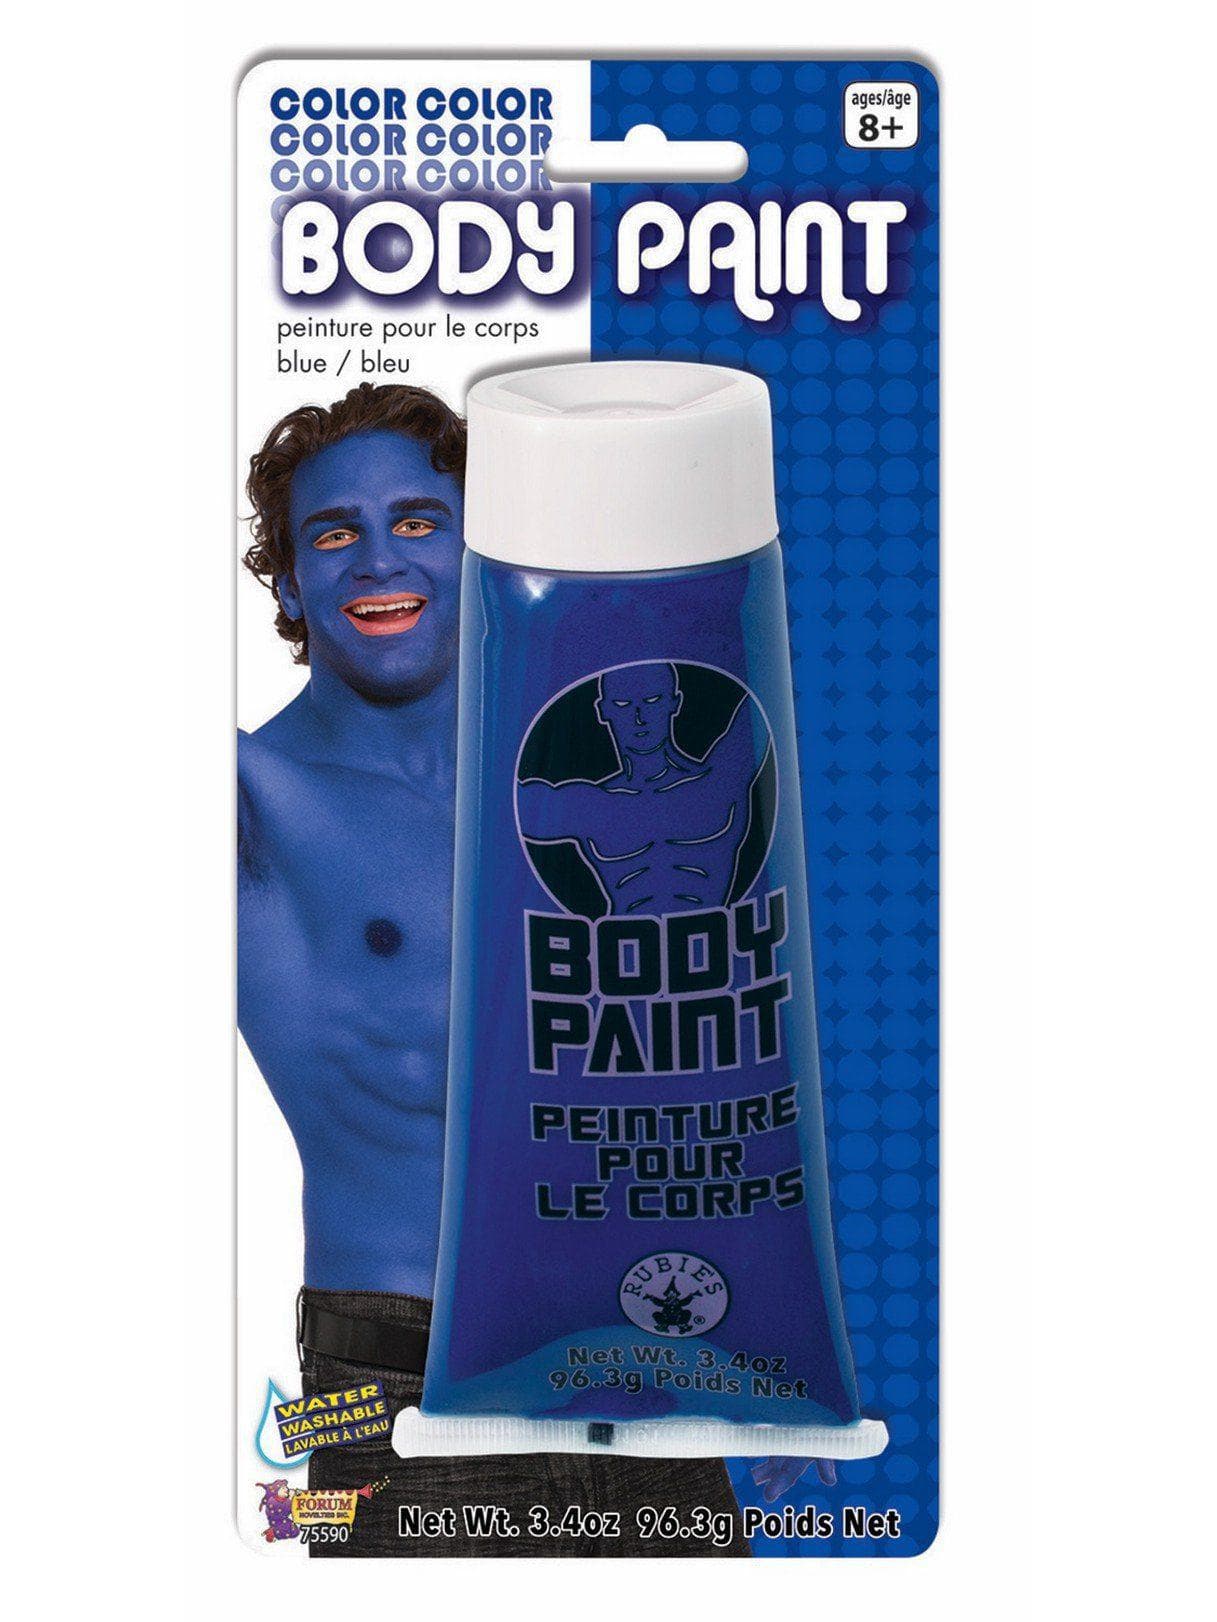 Blue Body Paint - costumes.com